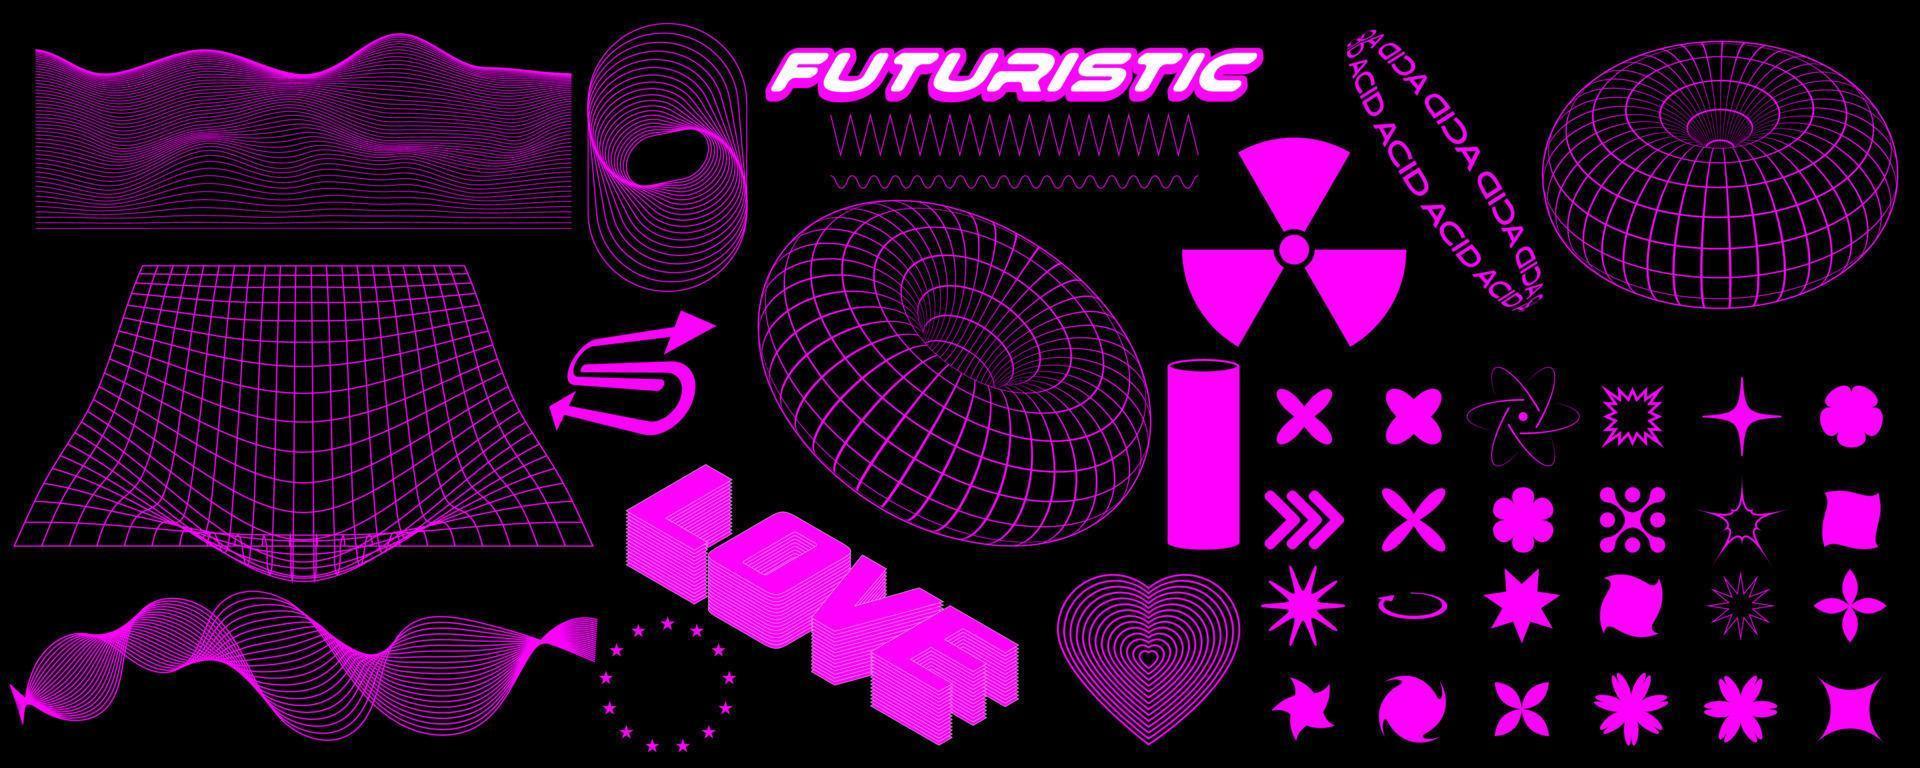 retro futurista Projeto elementos. 3d estrutura de arame formas dentro na moda retro cyberpunk anos 80 anos 90 estilo. ano 2000 estética. vetor